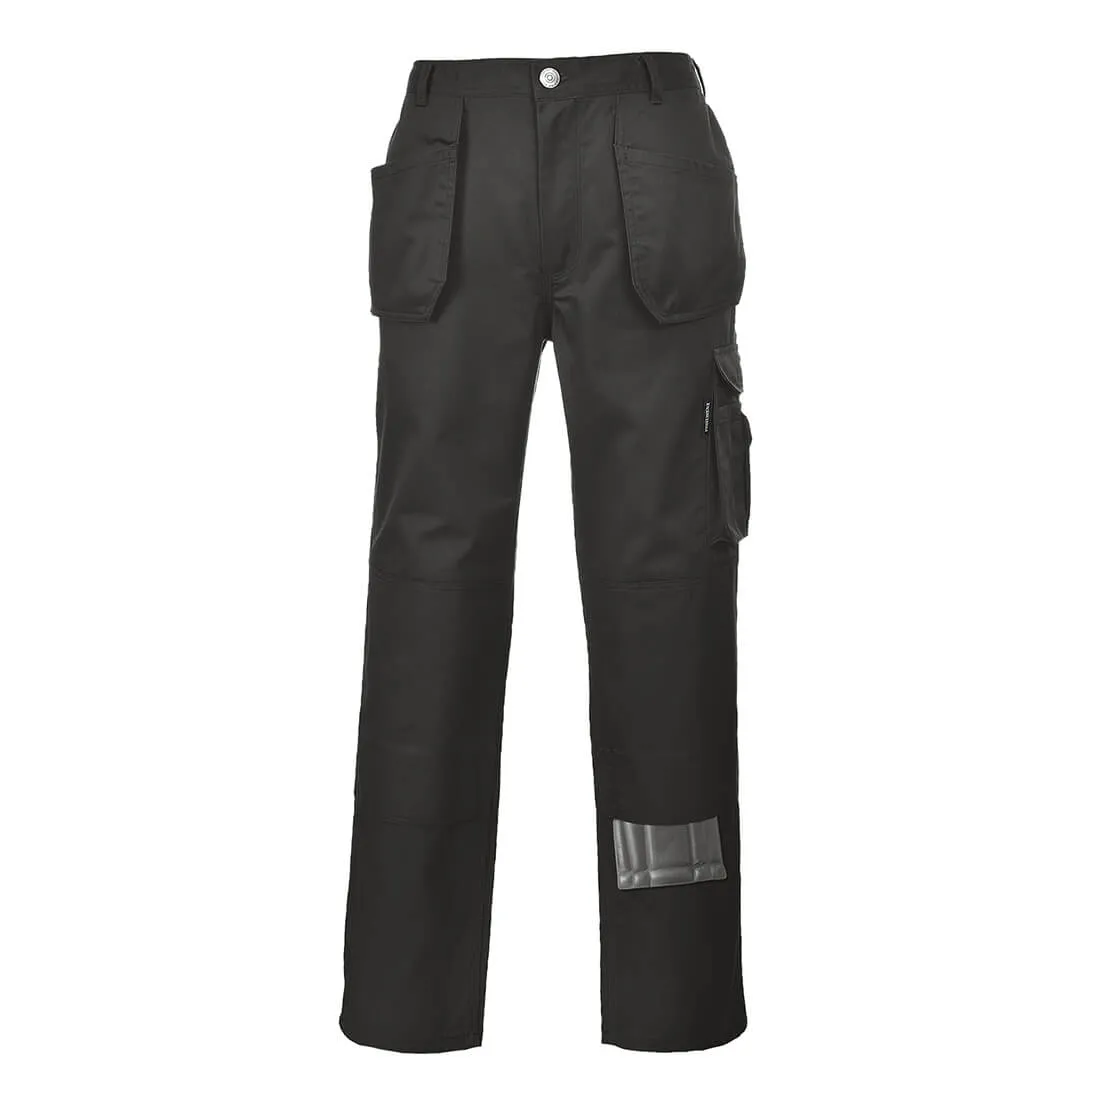 Portwest KS15 Slate Holster Trousers - Black, Small, 31"